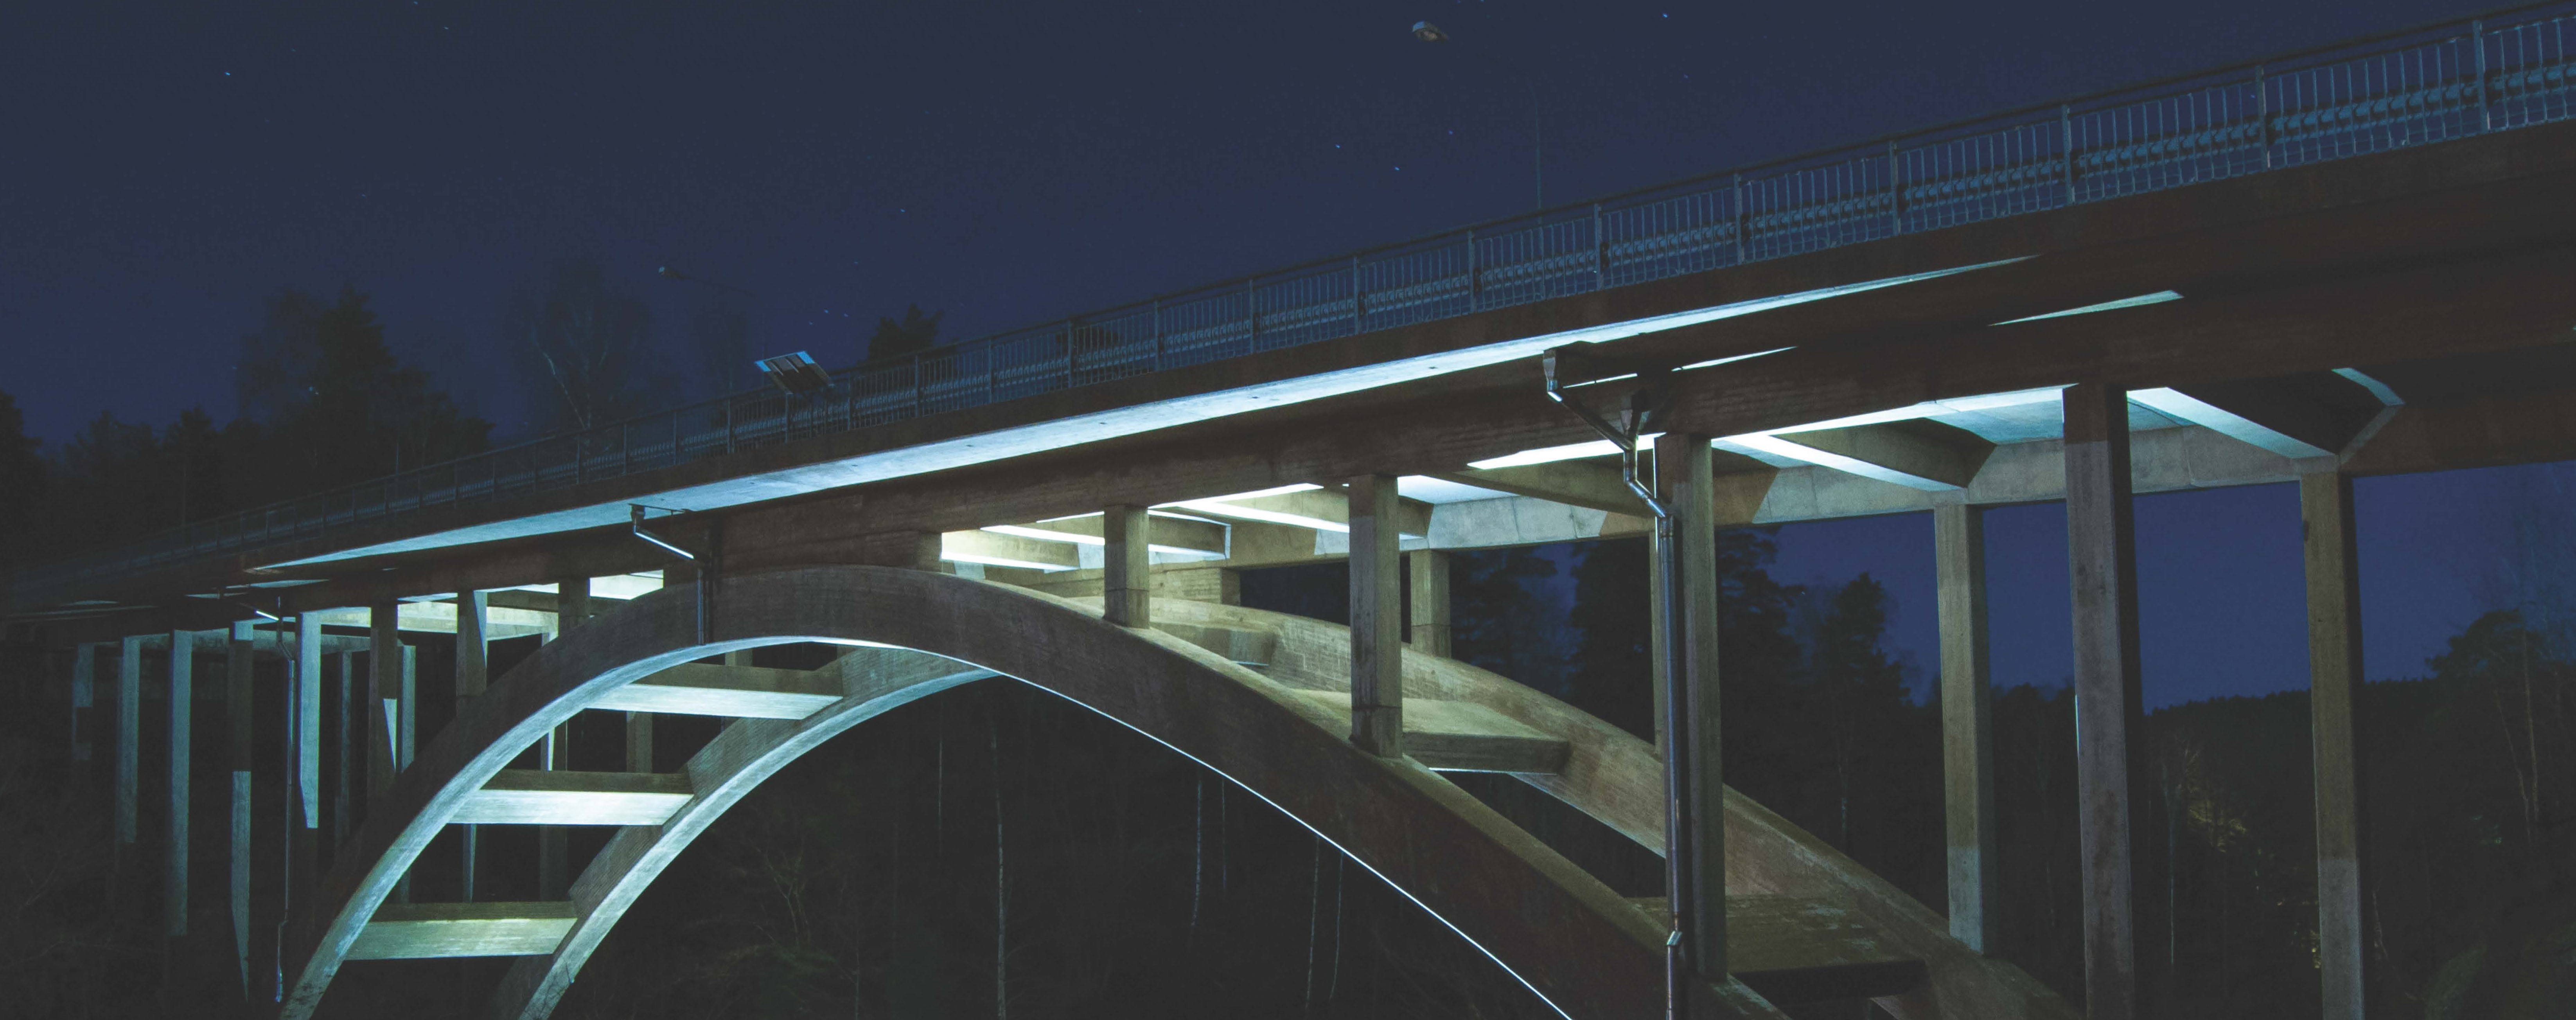 Ljussatt bro